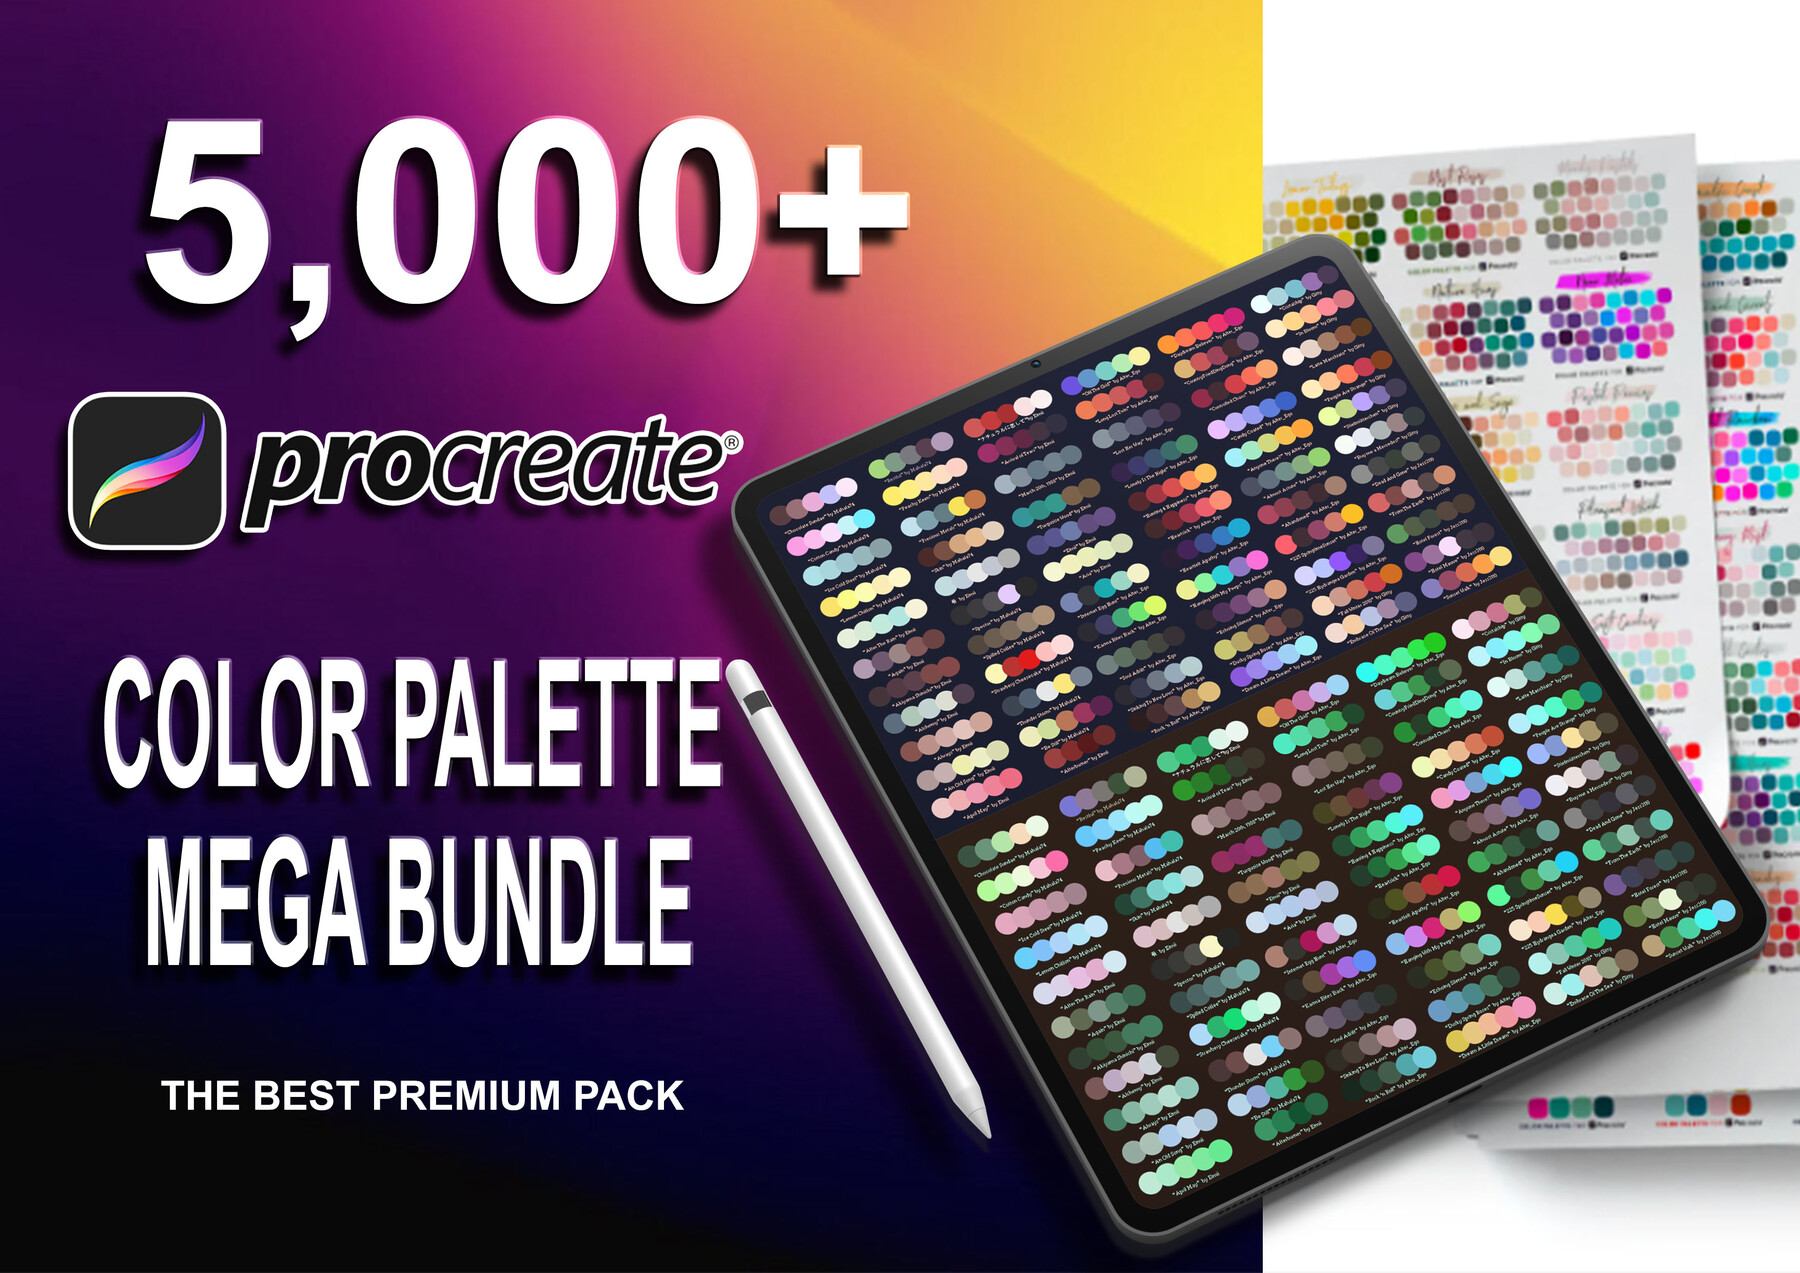 ArtStation - 5000+ Procreate Color Palette Mega Bundle